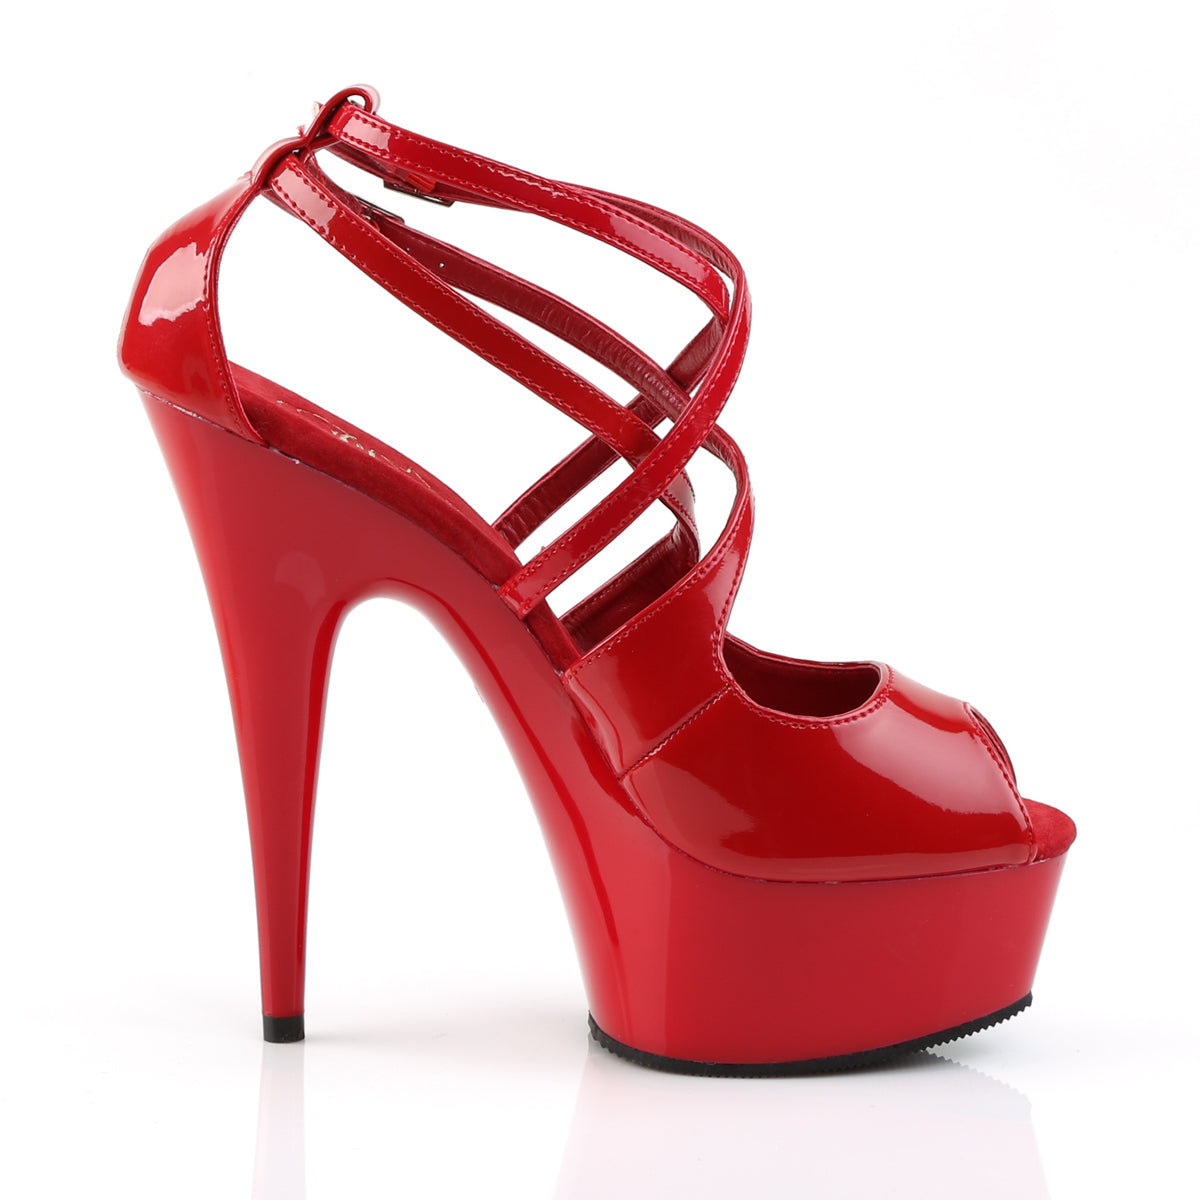 DELIGHT-612 Pleaser 6 Inch Heel Red Pole Dancing Platforms-Pleaser- Sexy Shoes Fetish Heels